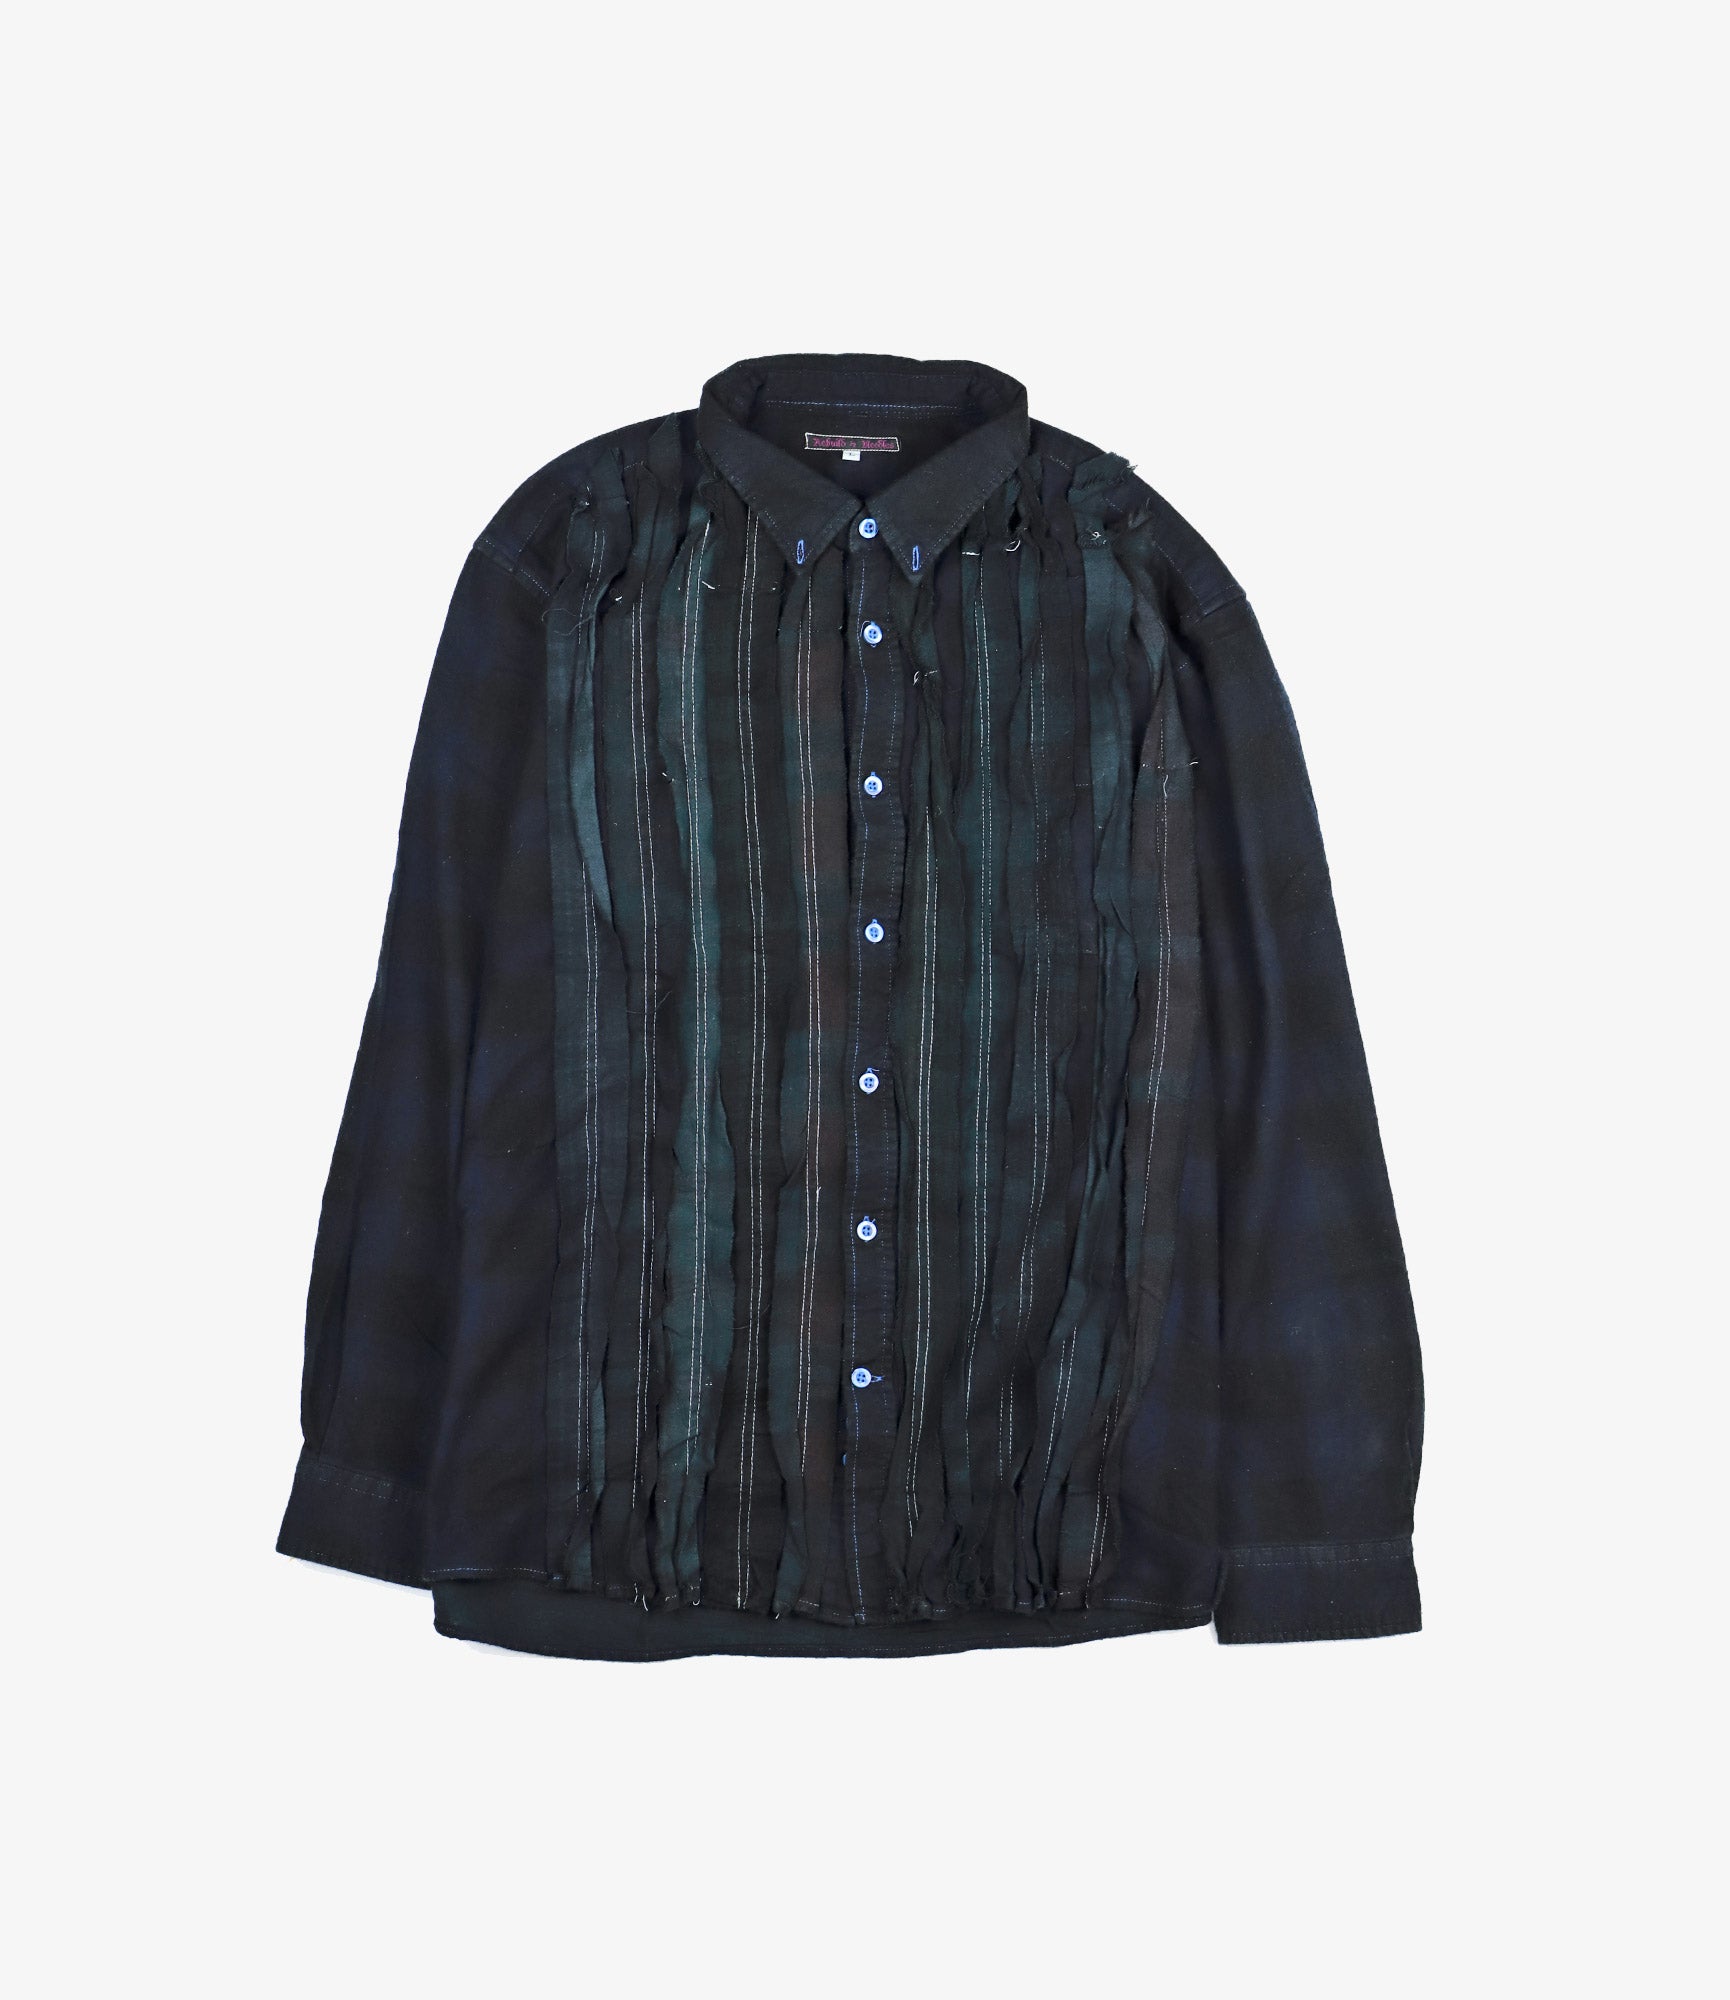 Rebuild by Needles Flannel Shirt - Ribbon Shirt / Over Dye - Black